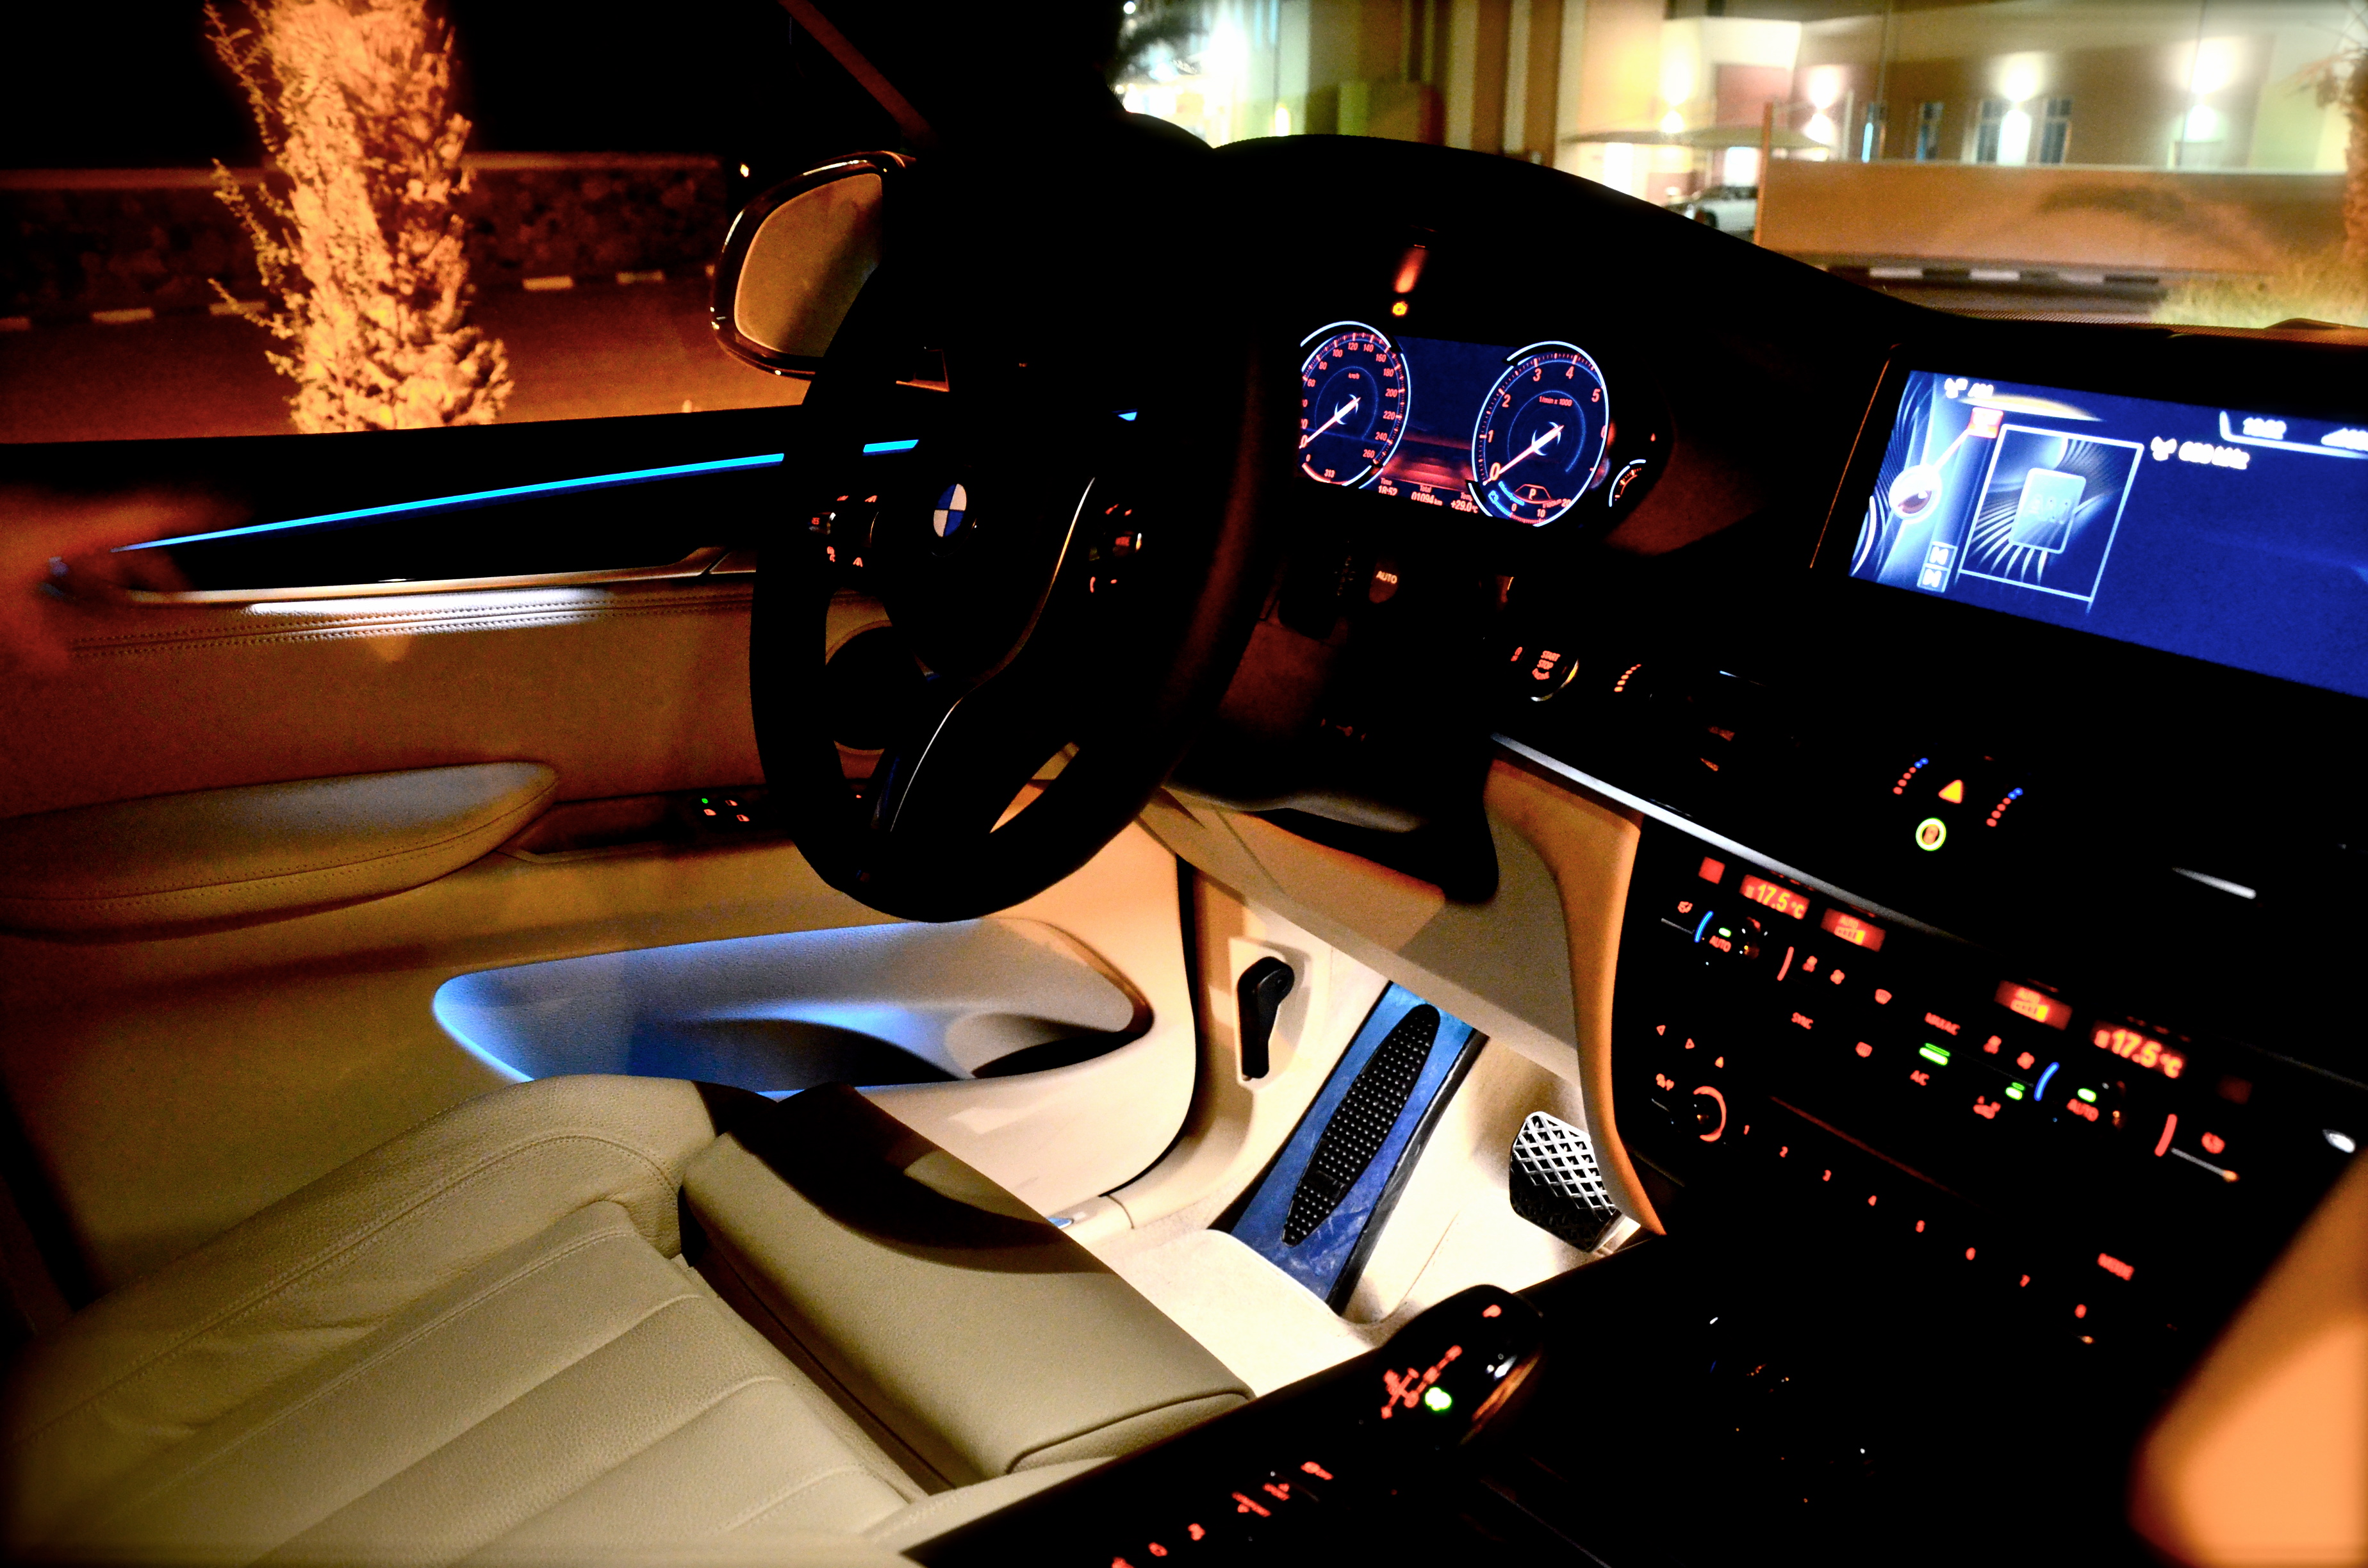 Ambient inside the BMW X5 – Dubaicravings.com